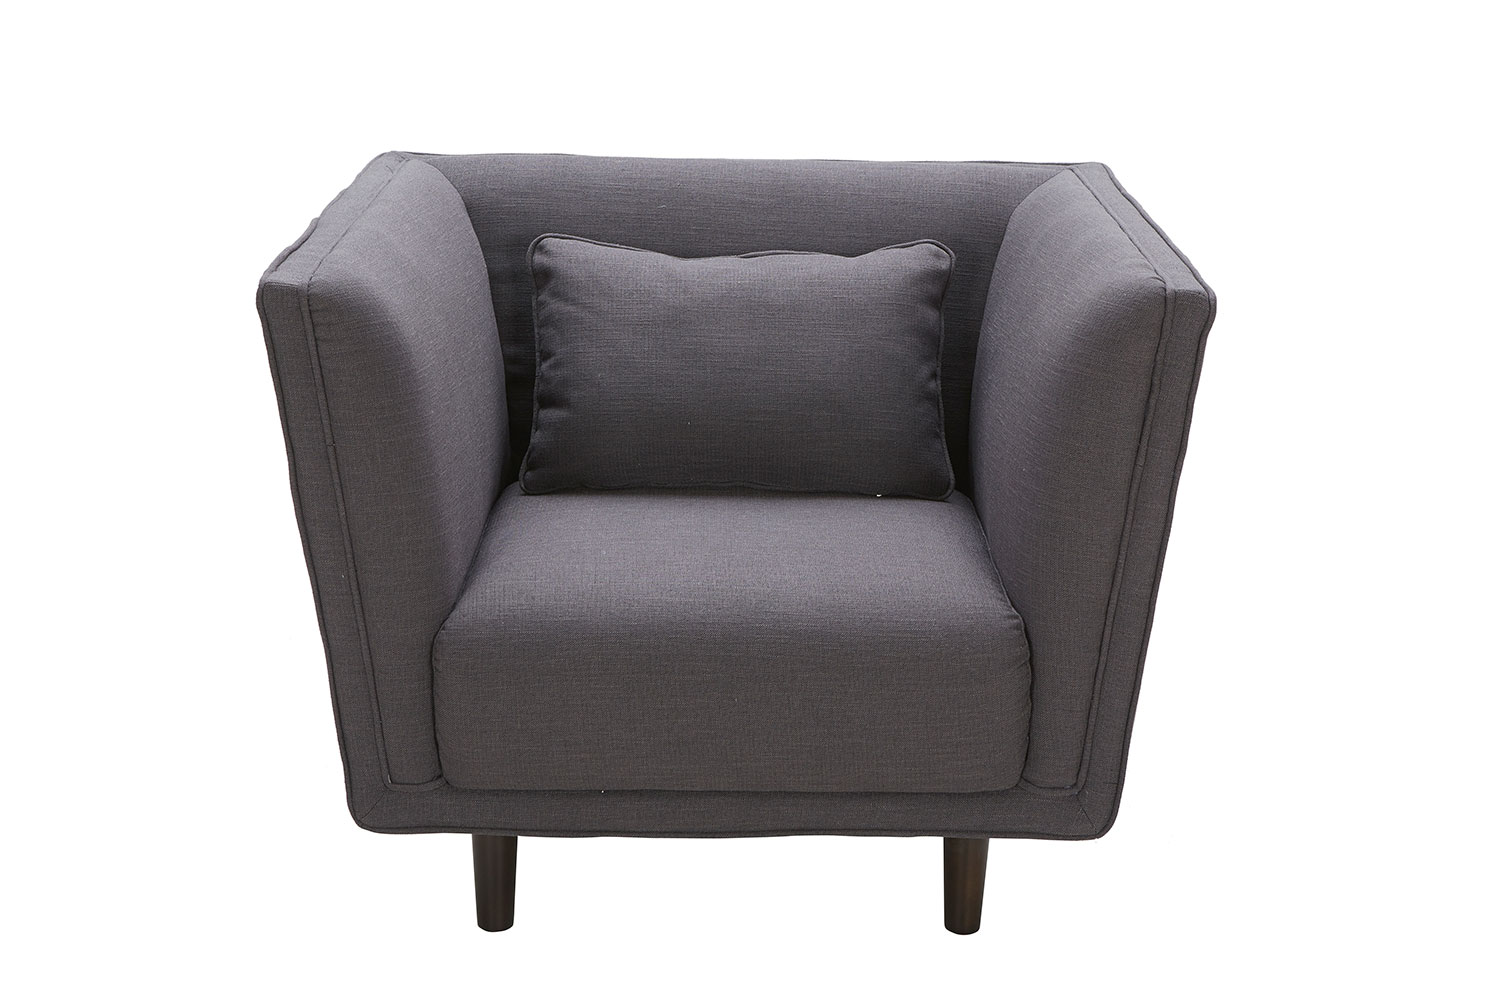 ELEMENTS Fine Home Furnishings Manhattan Fabric Standard Chair - Concrete